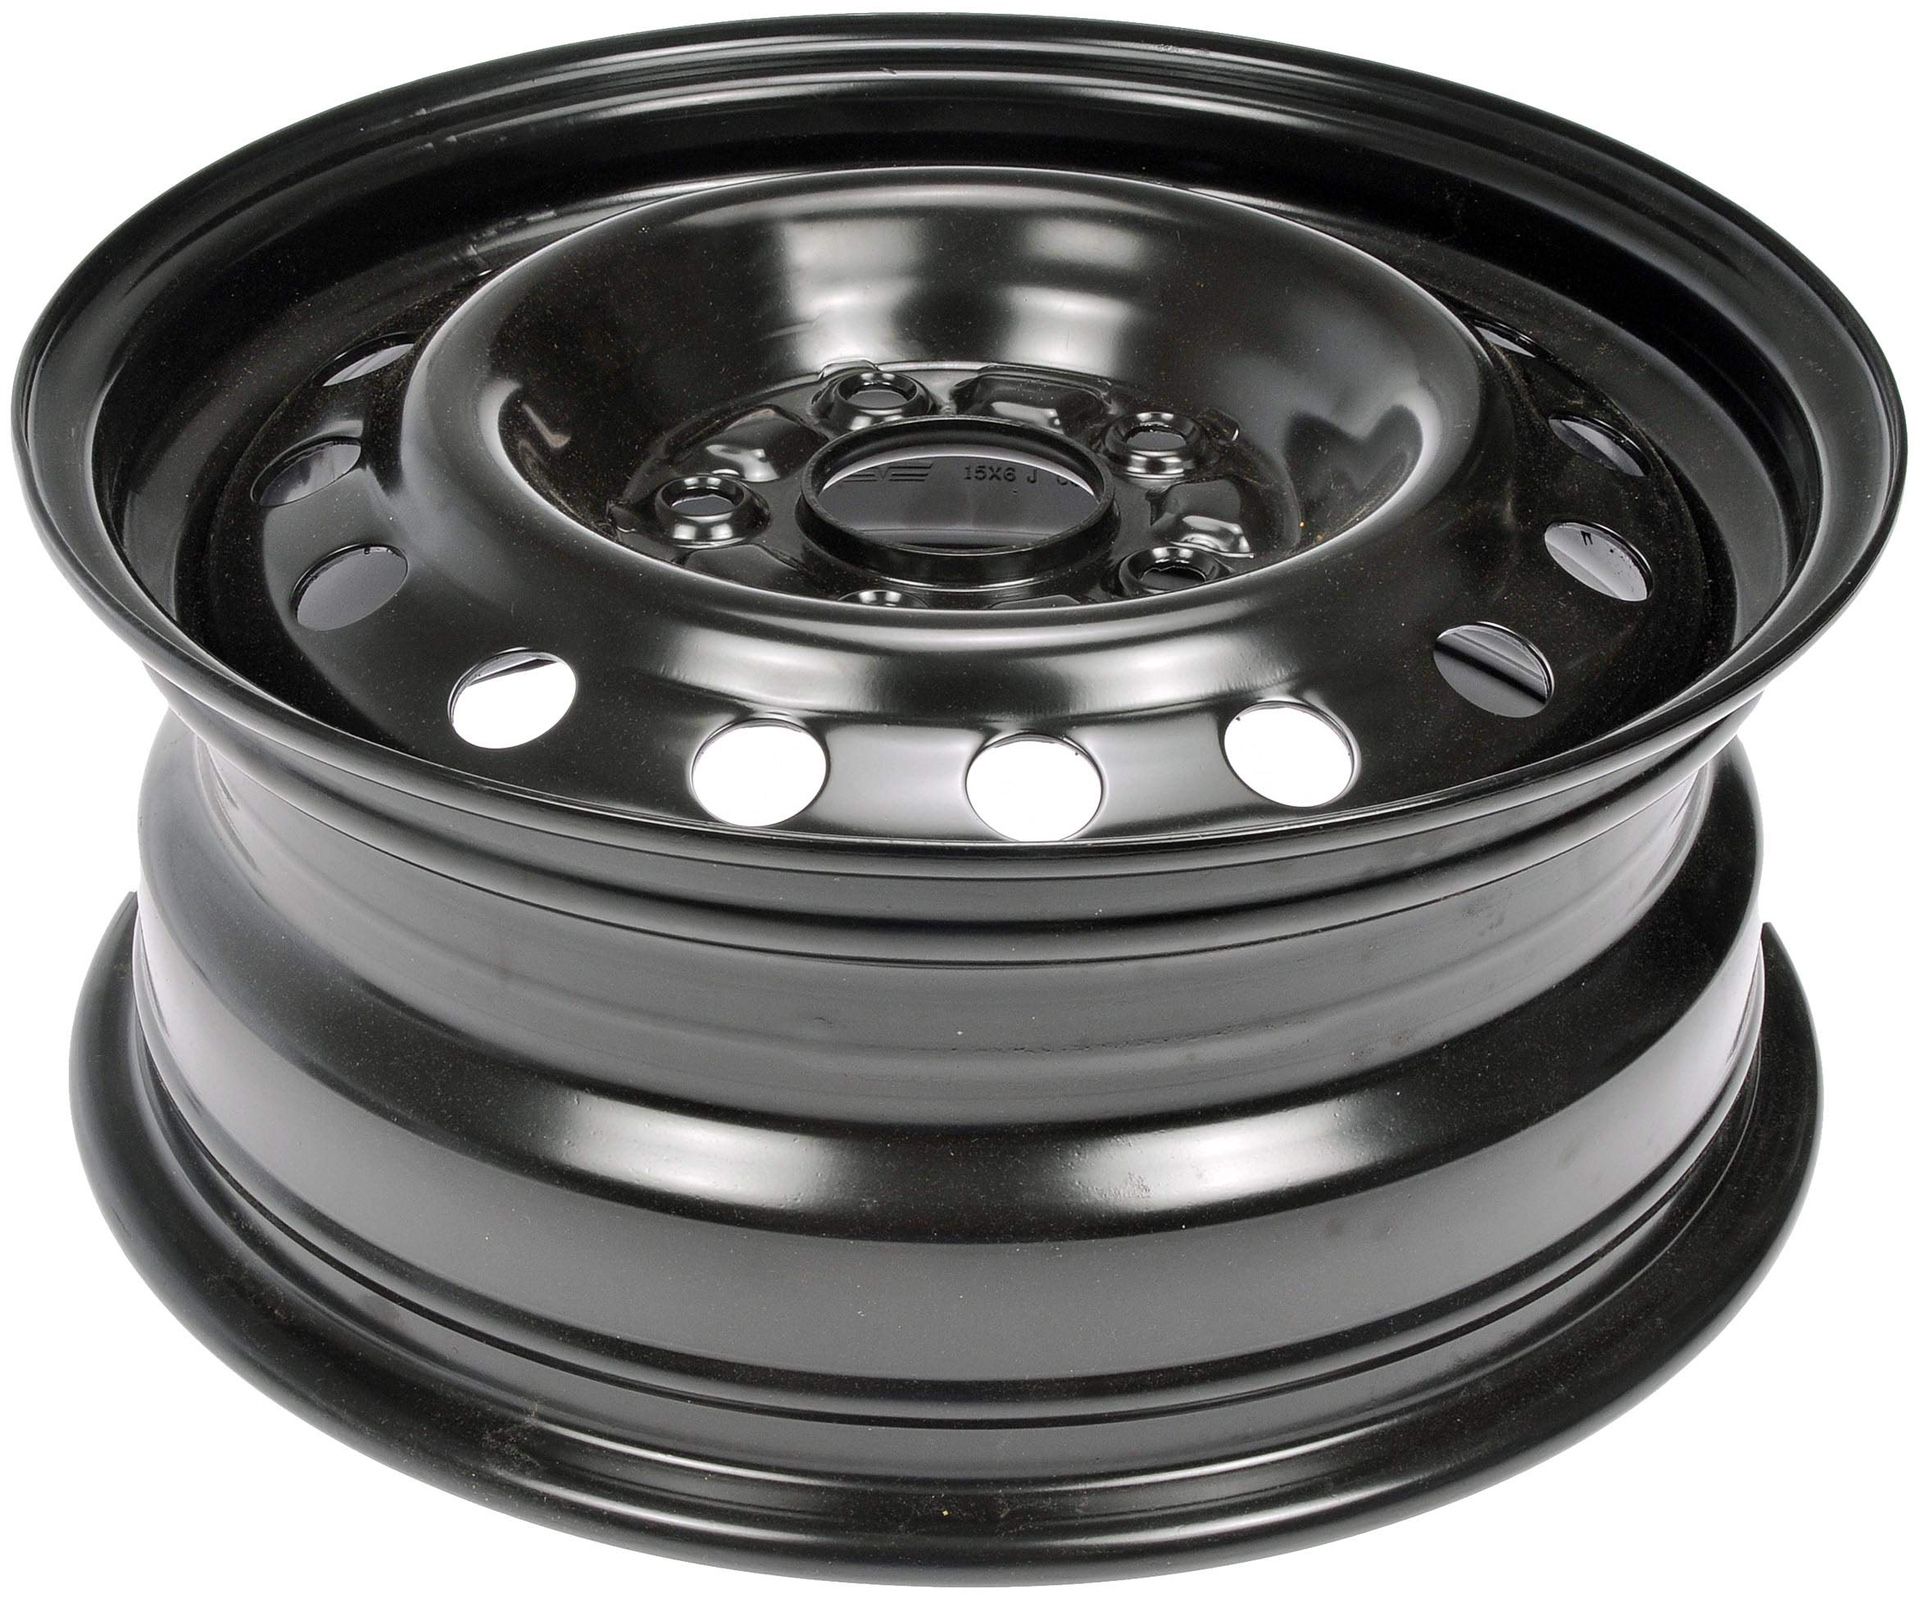 Dorman 939-265 15 X 6 In. Single Steel Wheel Compatible With Select Honda Models, Black